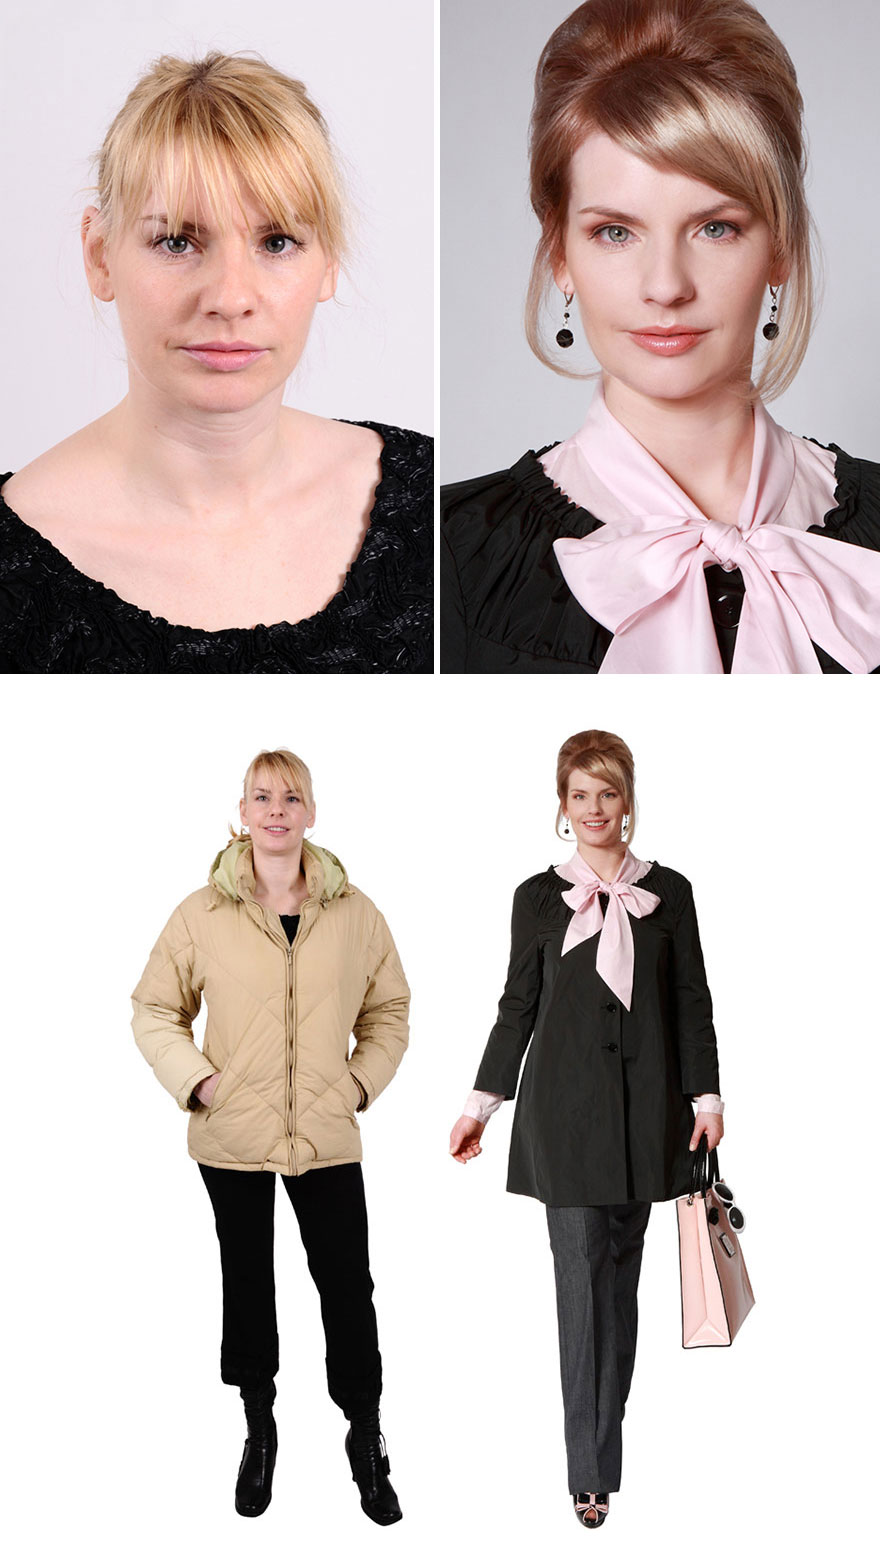 before-after-makeup-woman-style-change-konstantin-bogomolov-31a-57023a4908735__880